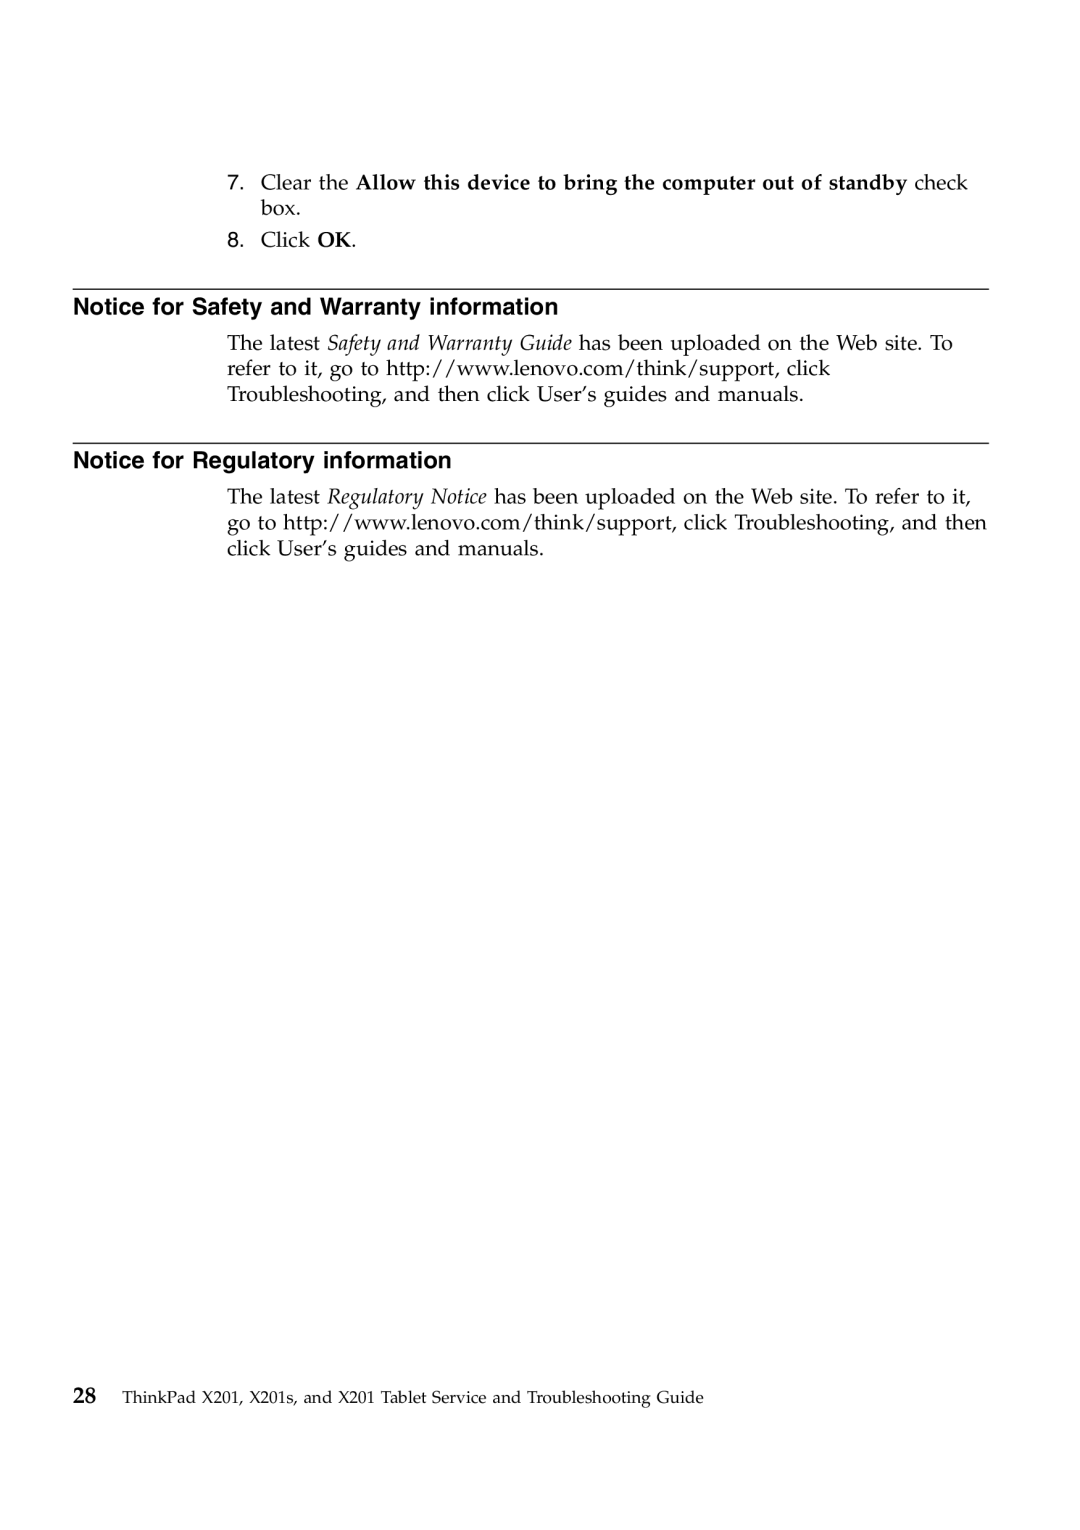 Lenovo 2985EWU, X201S, 311396U manual Notice for Safety and Warranty information, Notice for Regulatory information, Click OK 